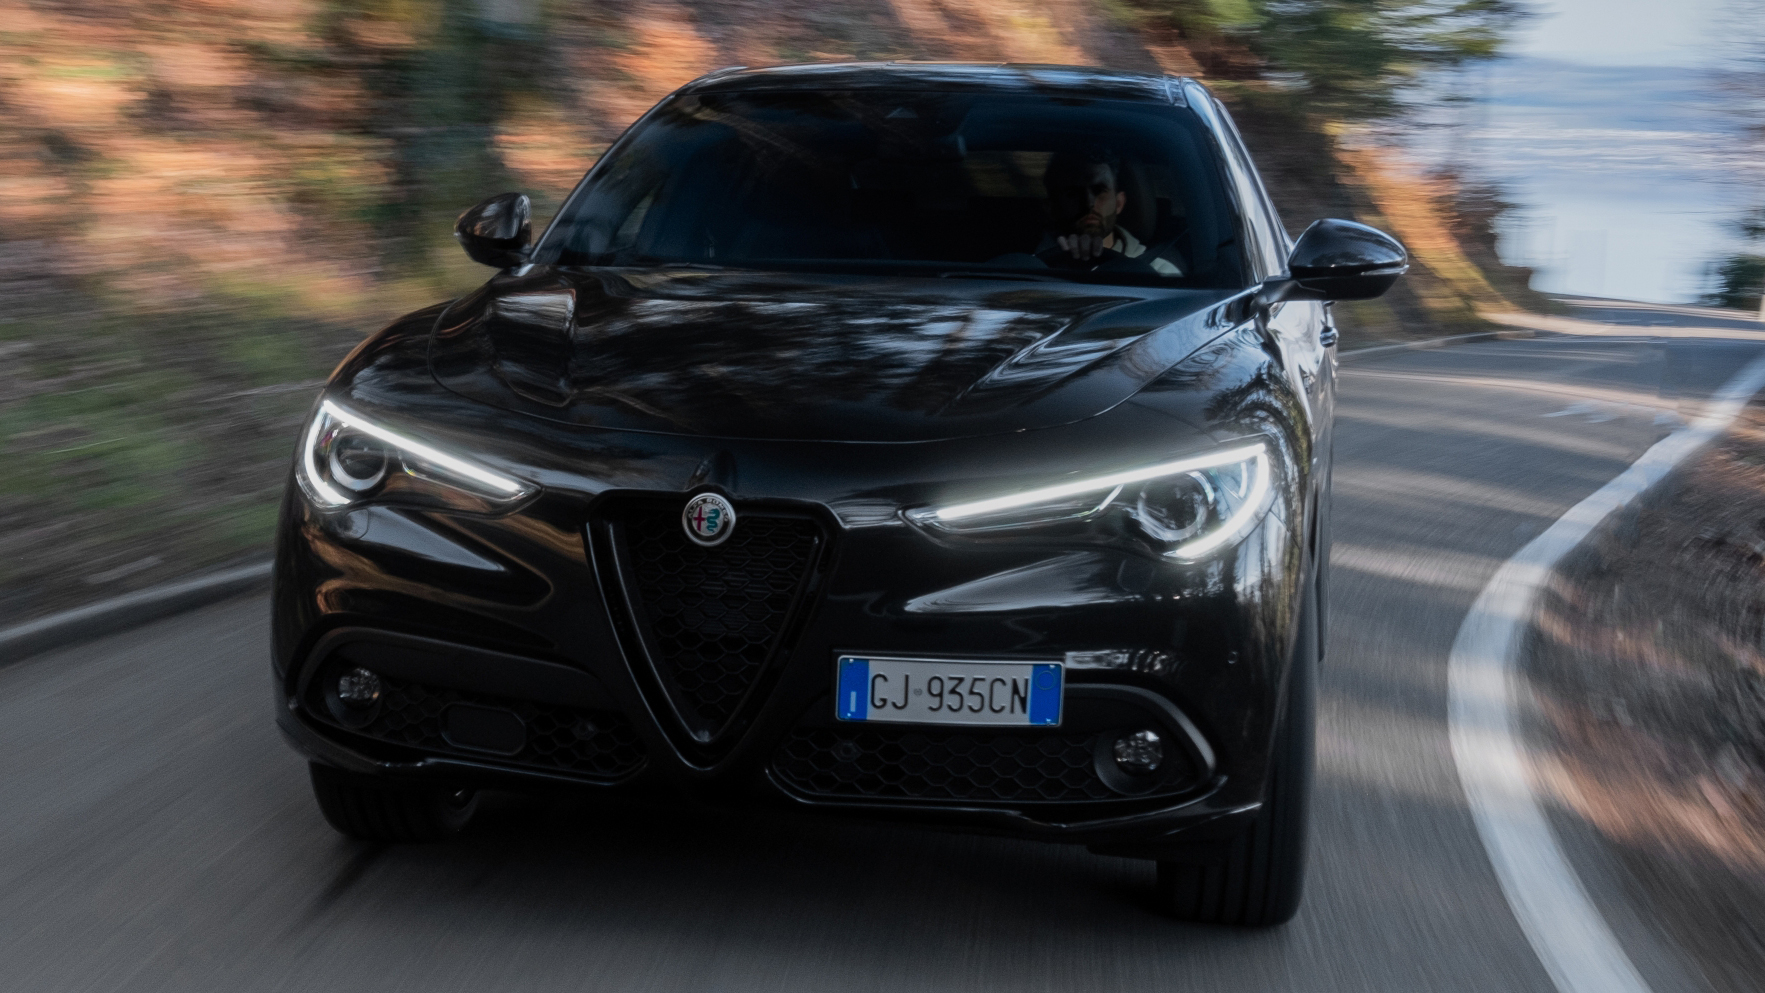 Car Review: Alfa Romeo Stelvio Estrema is full of character